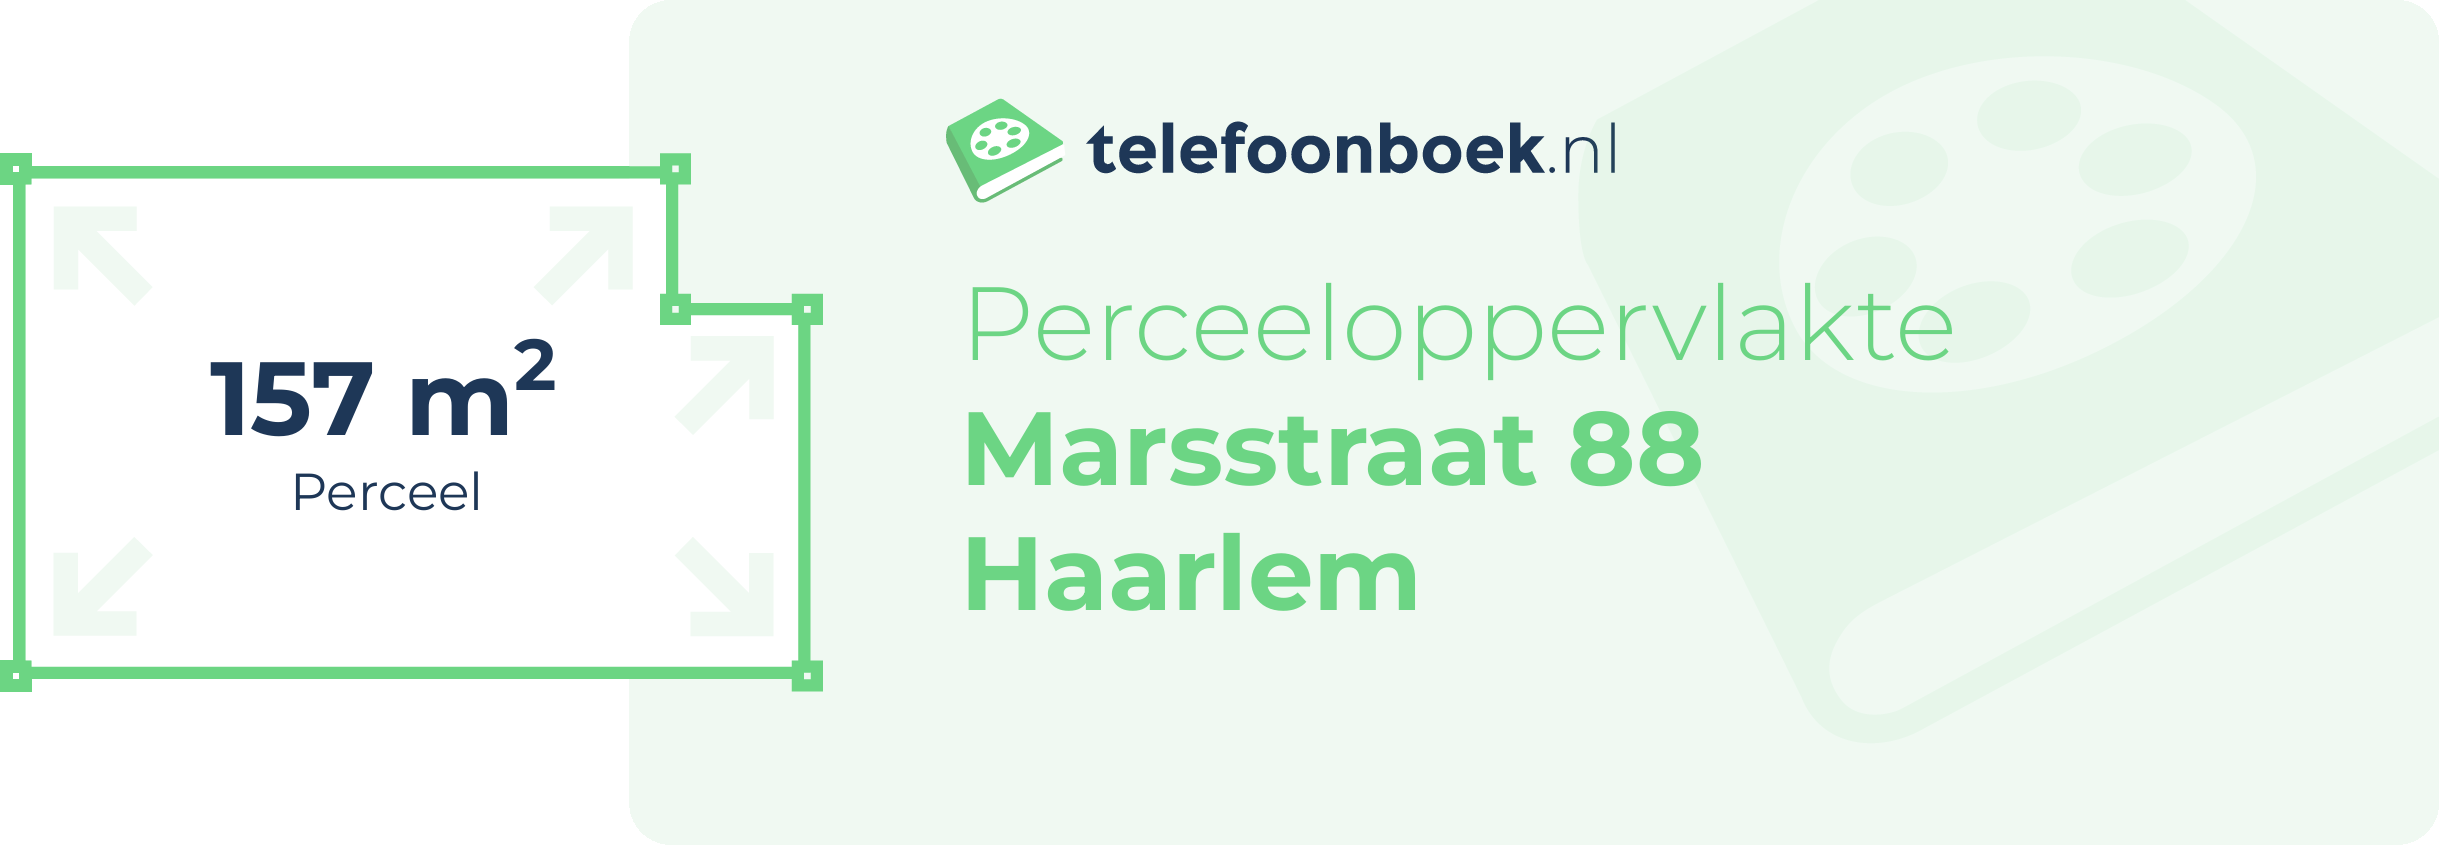 Perceeloppervlakte Marsstraat 88 Haarlem